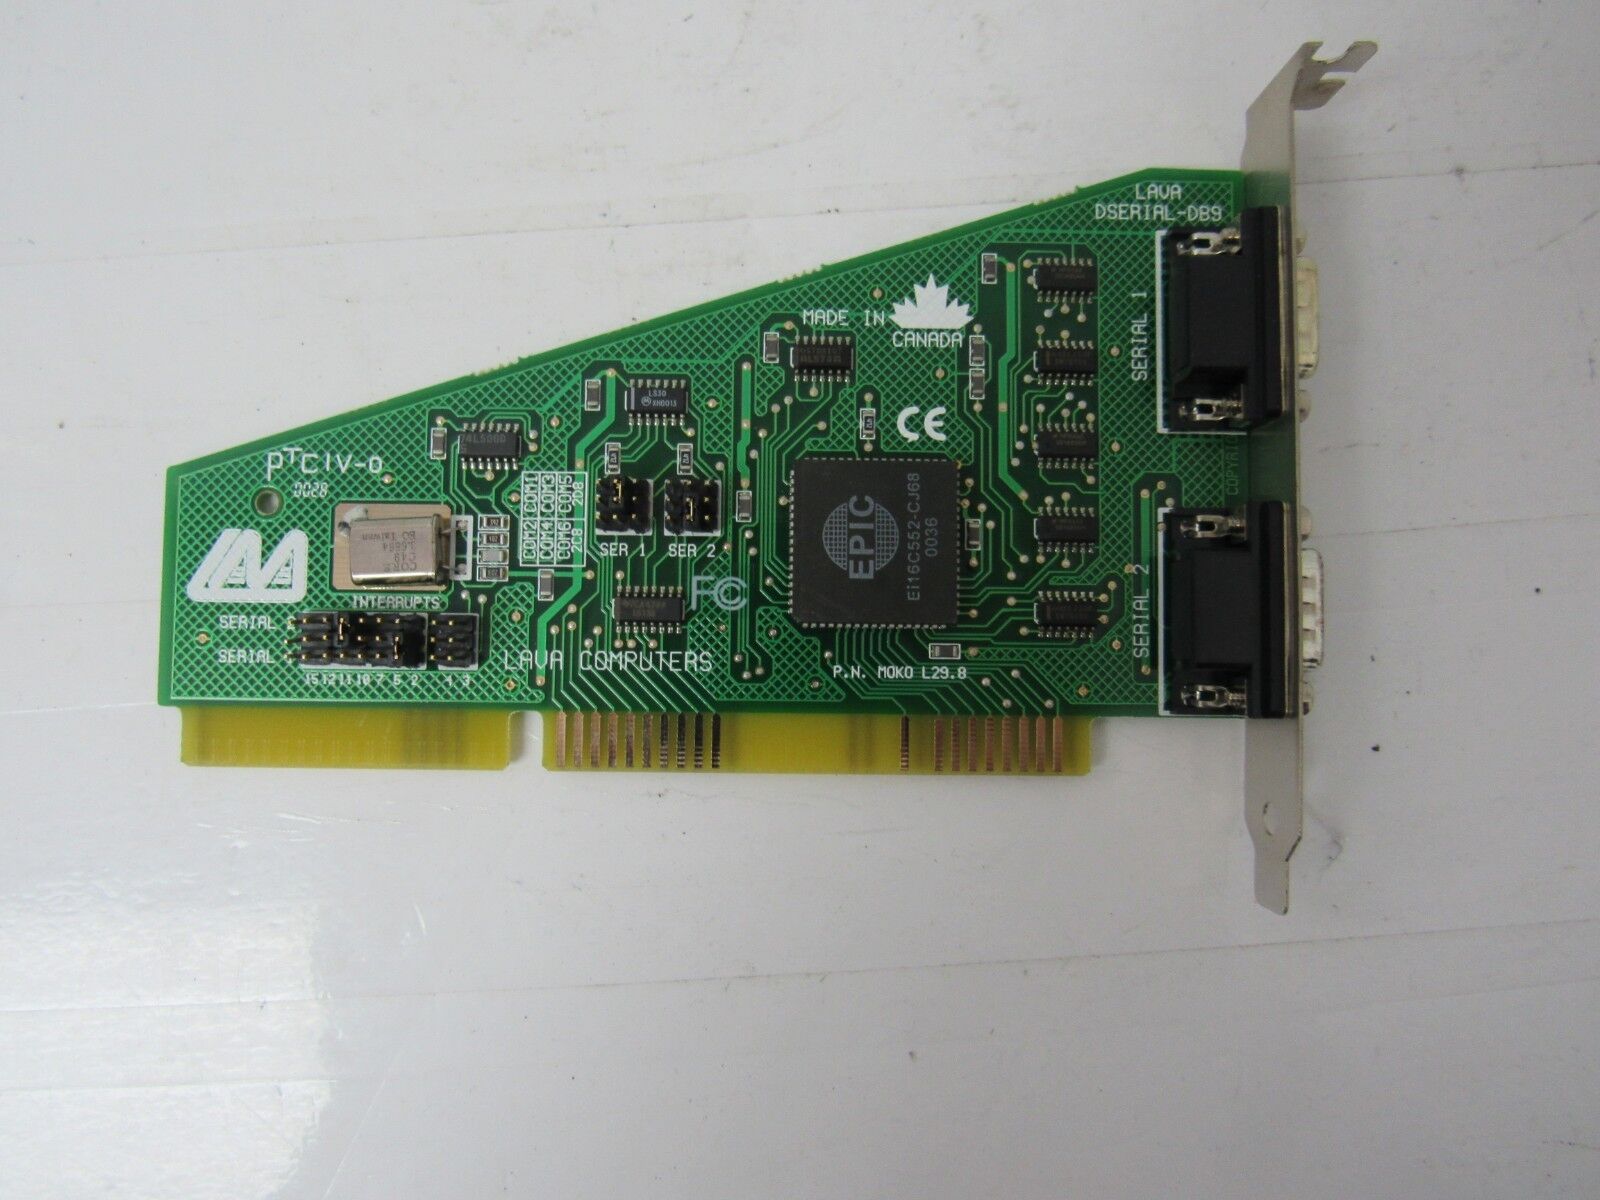 LAVA COMPUTERS PTCIV-0 DSERIAL-DB9 CARD